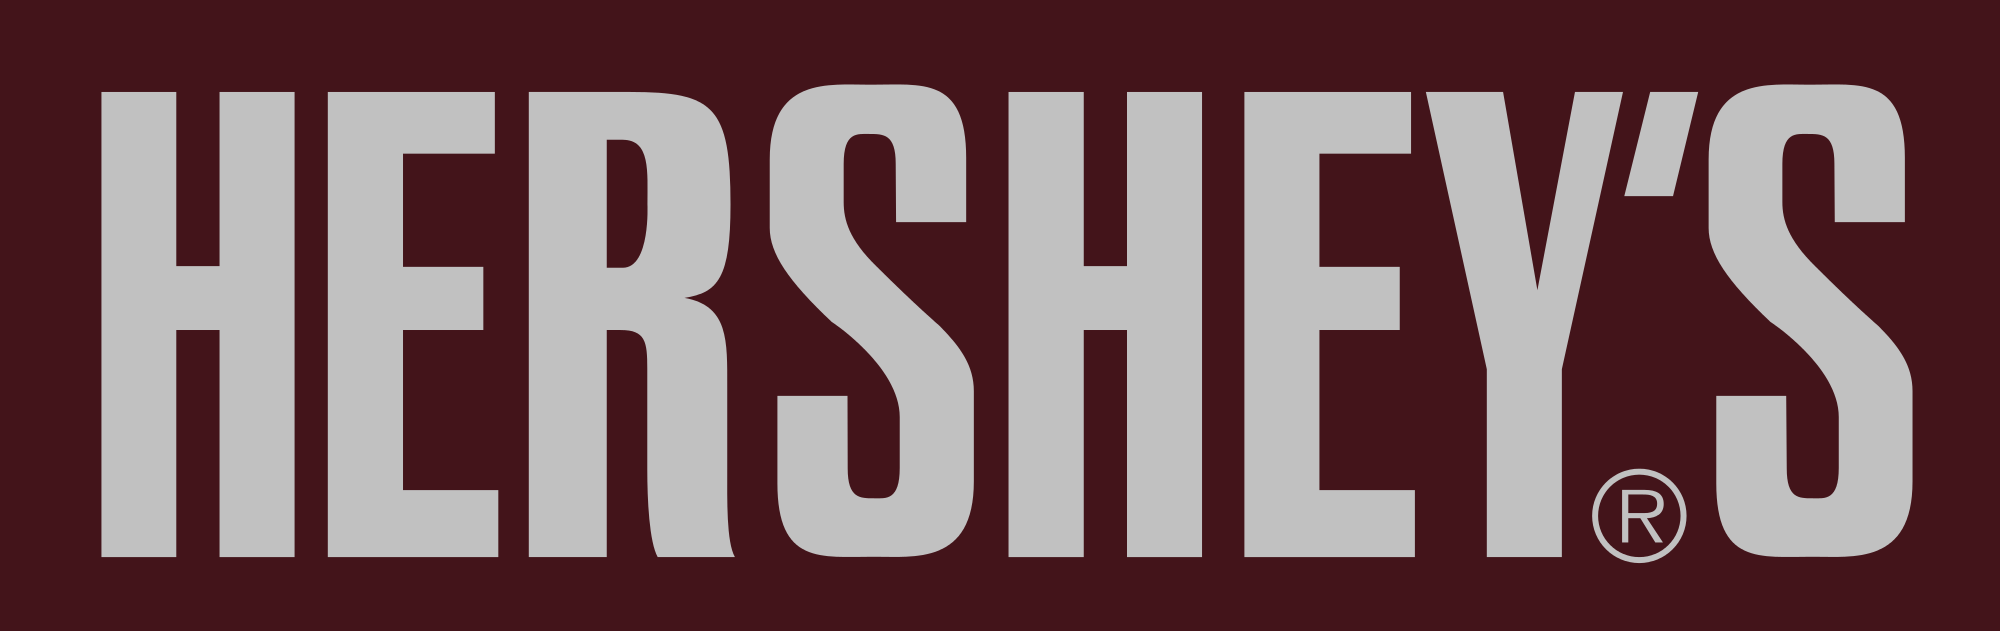 Hershey logo png » PNG Image